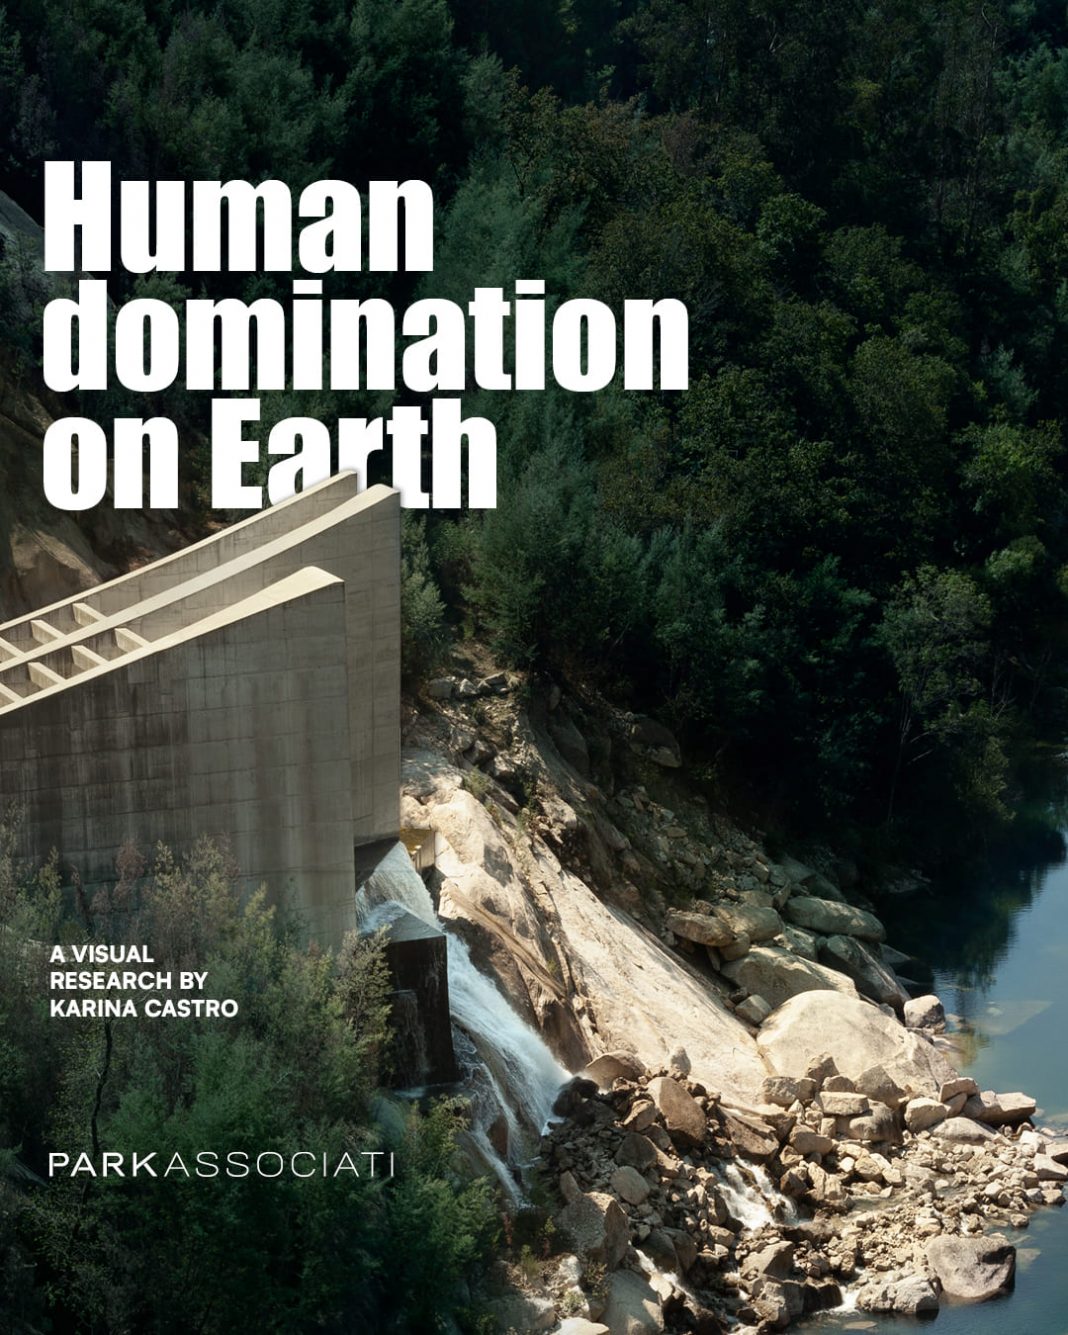 Karina Castro – Human domination on Earthhttps://www.exibart.com/repository/media/formidable/11/img/5c7/Human-domination-on-earth_Instagram-1-1068x1335.jpg